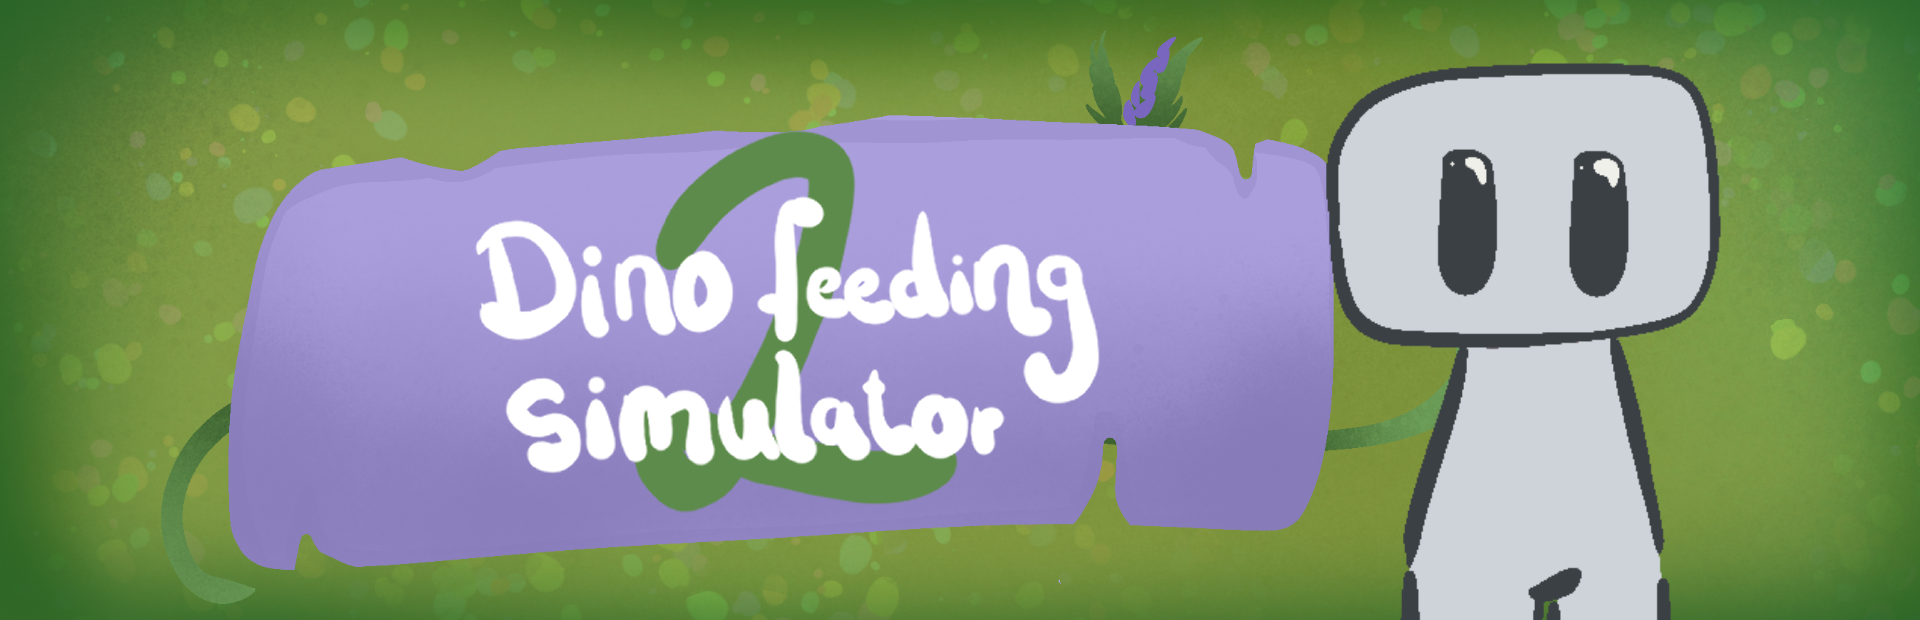 Dino Feeding Simulator 2